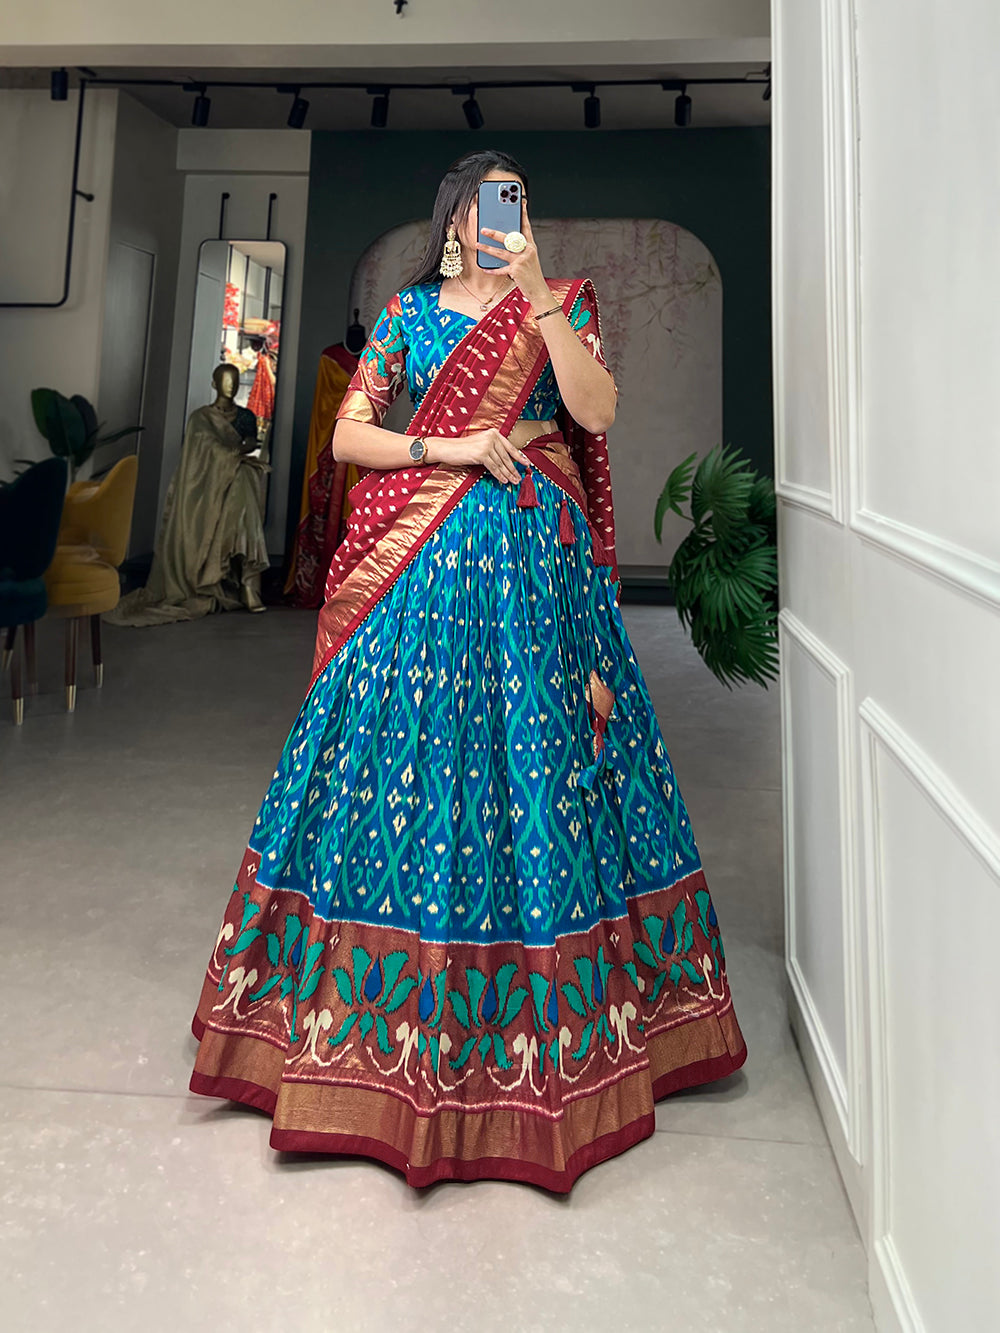 Firozi Color Embroidery Work Banarasi Silk Wedding Wear Lehenga Choli  -4531155266